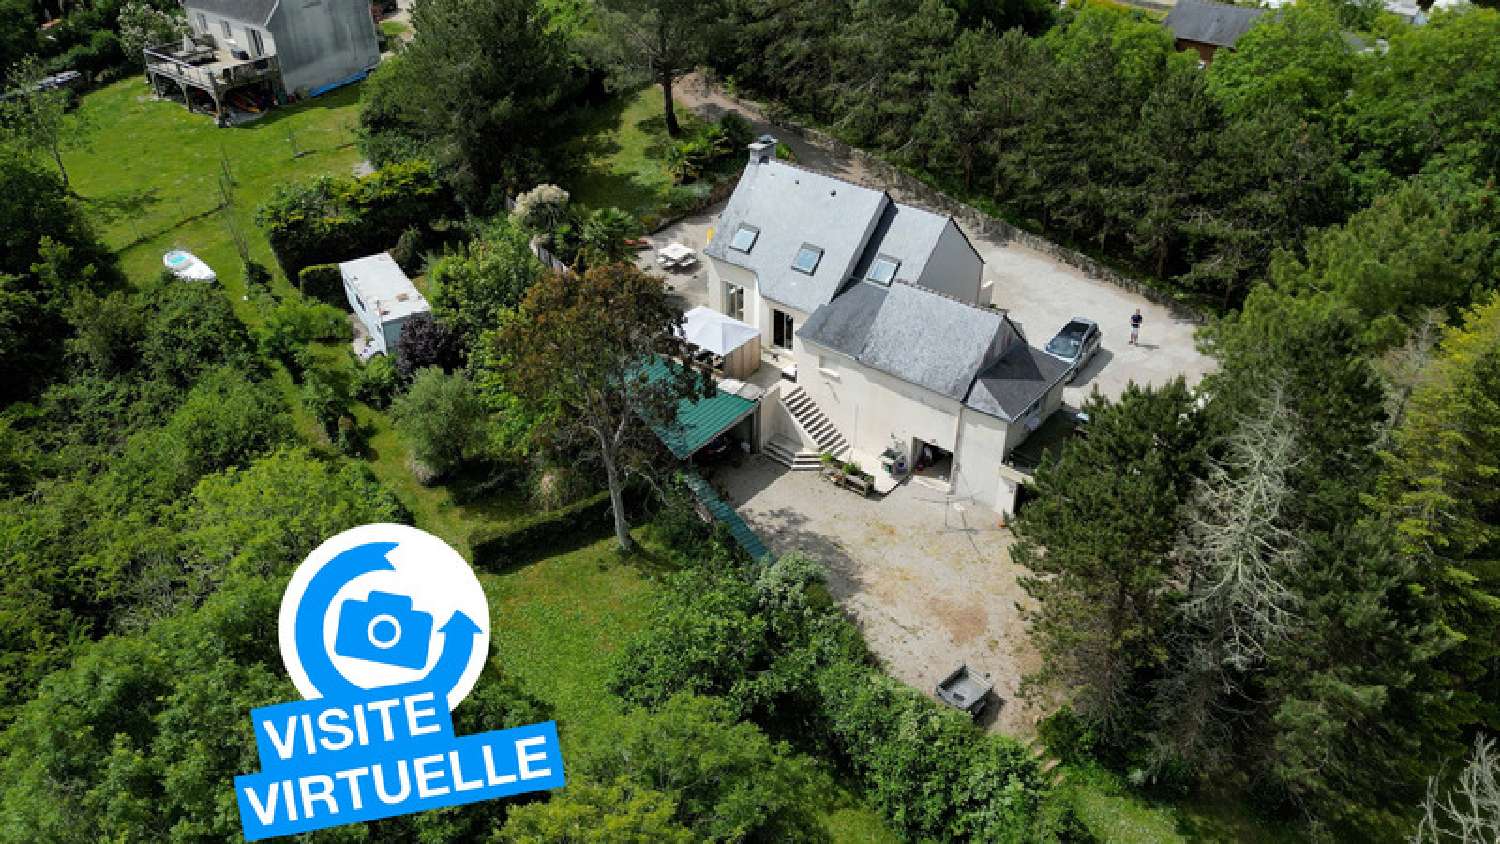  for sale house Camaret-sur-Mer Finistère 1